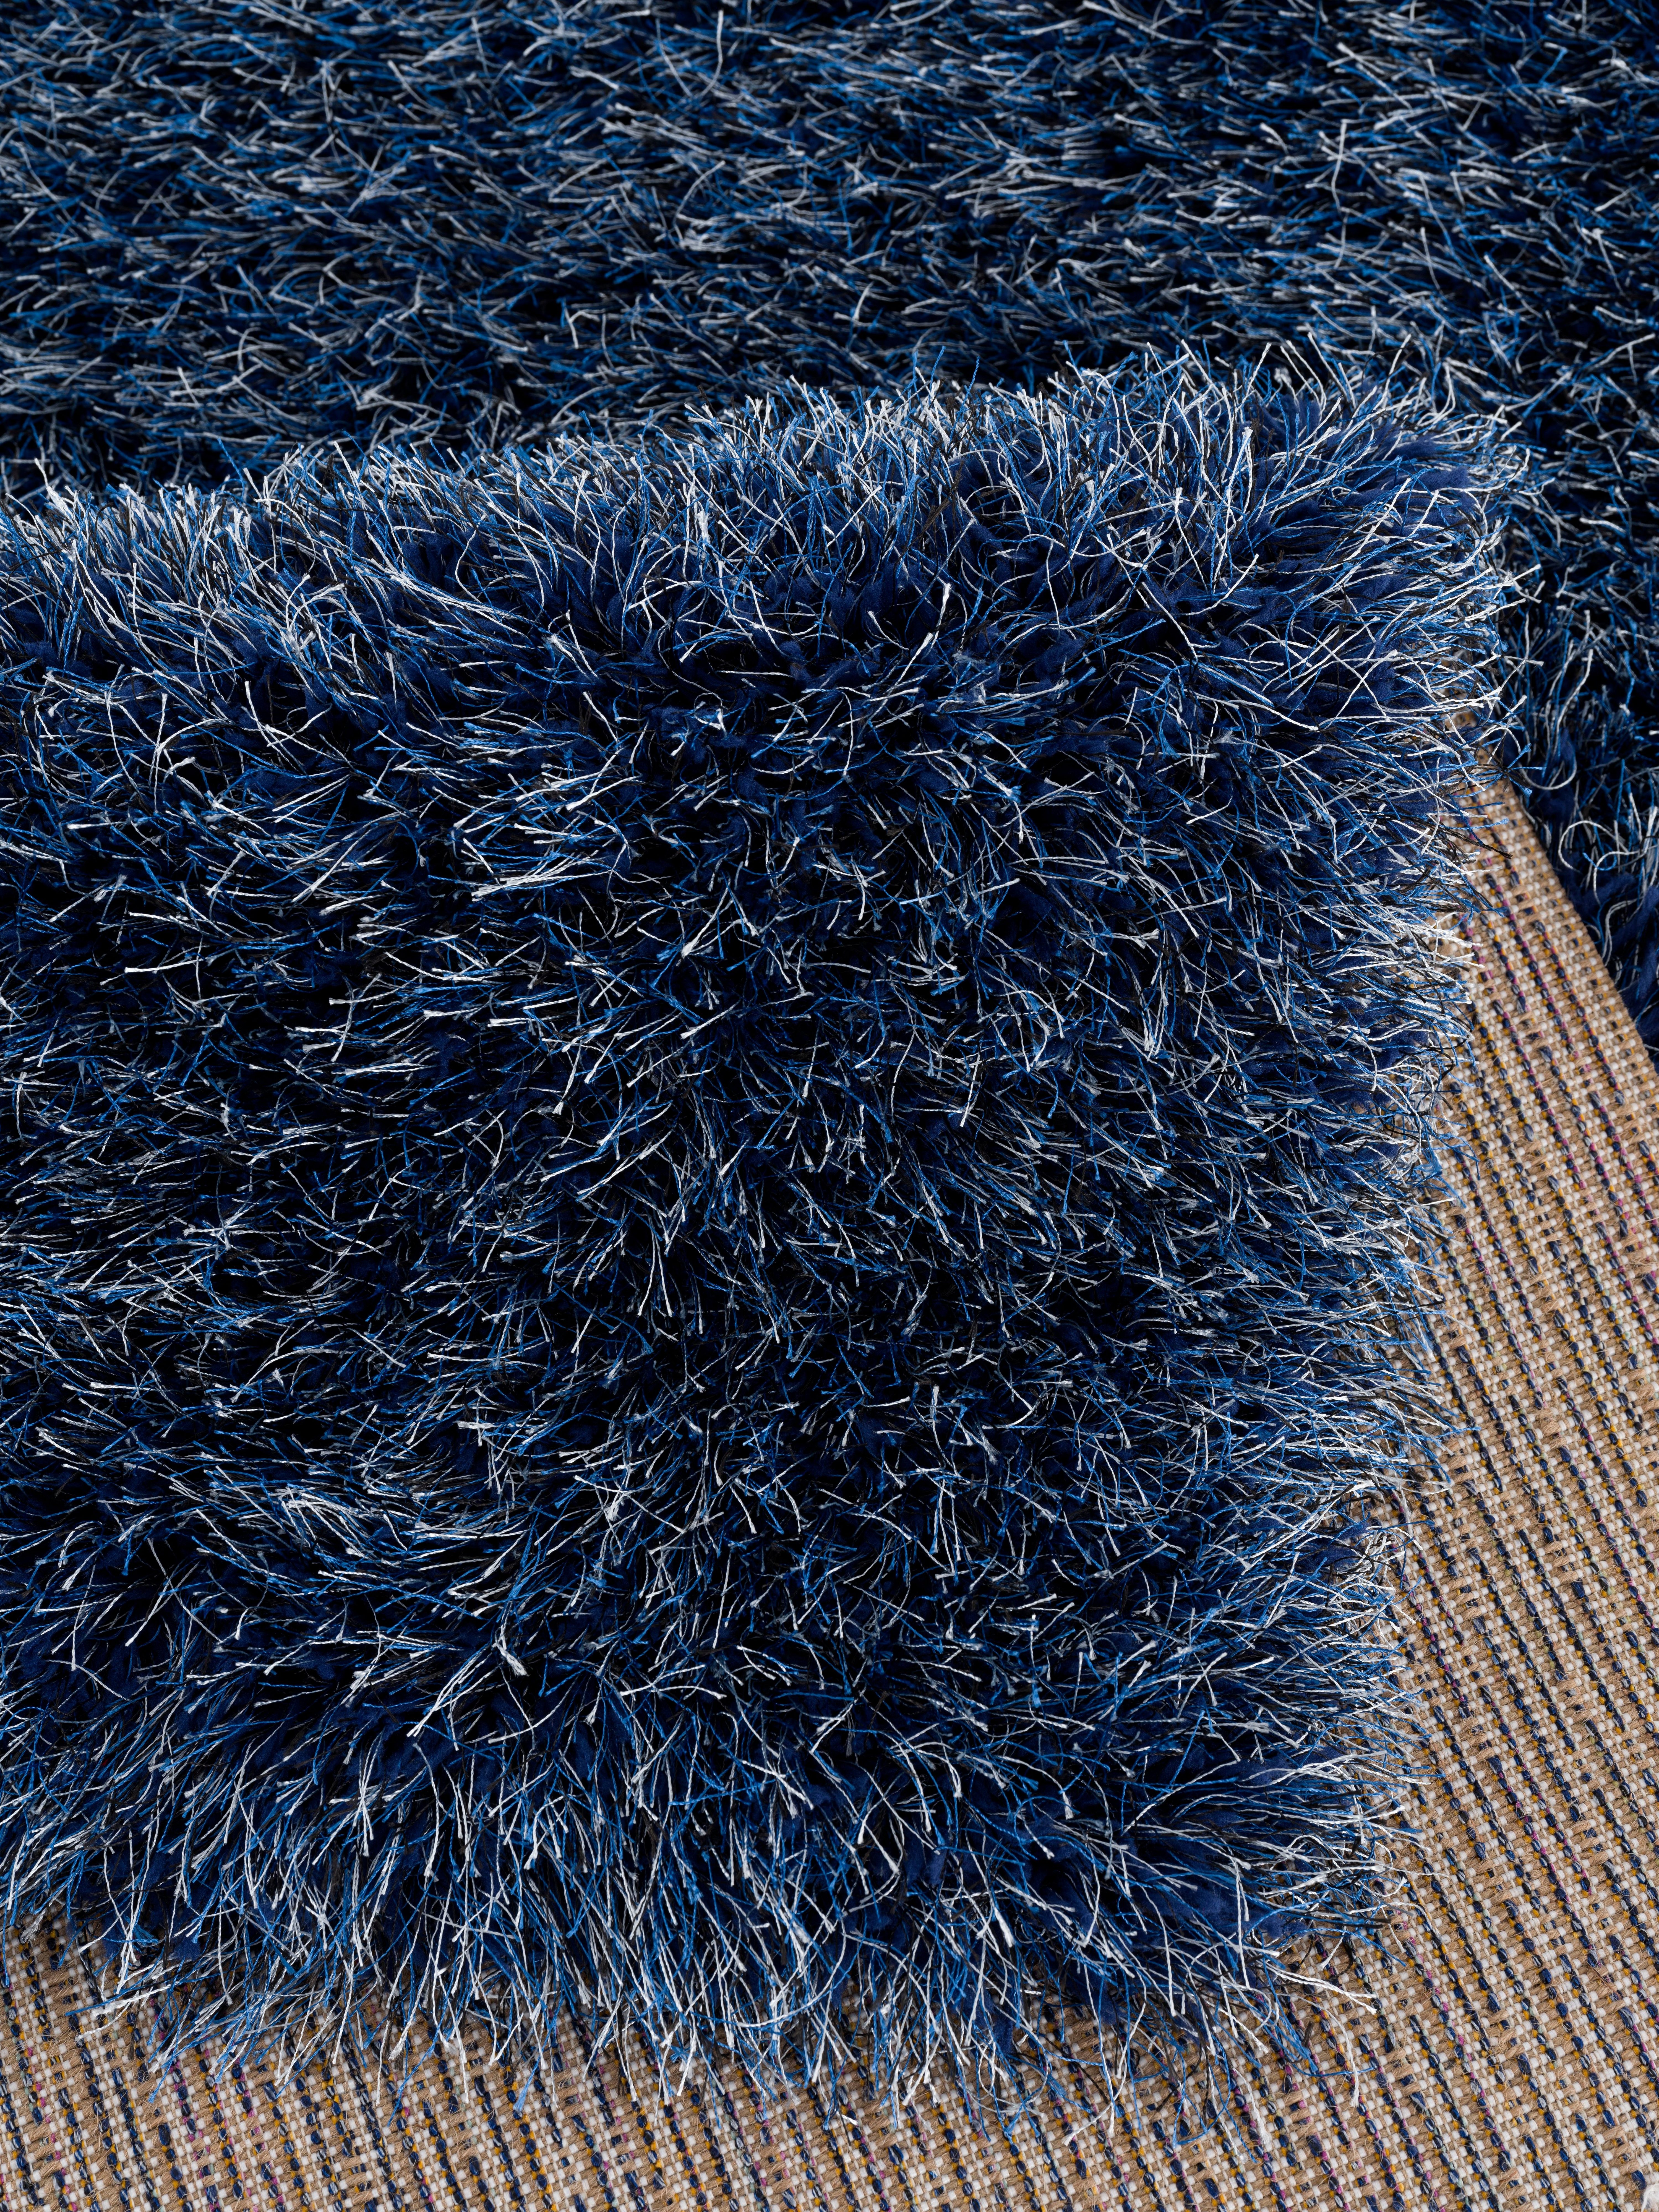 Hochflor-Teppich Amadeo, my 73 home, Höhe: einfarbig langer jeansblau Flor, rechteckig, besonders mm